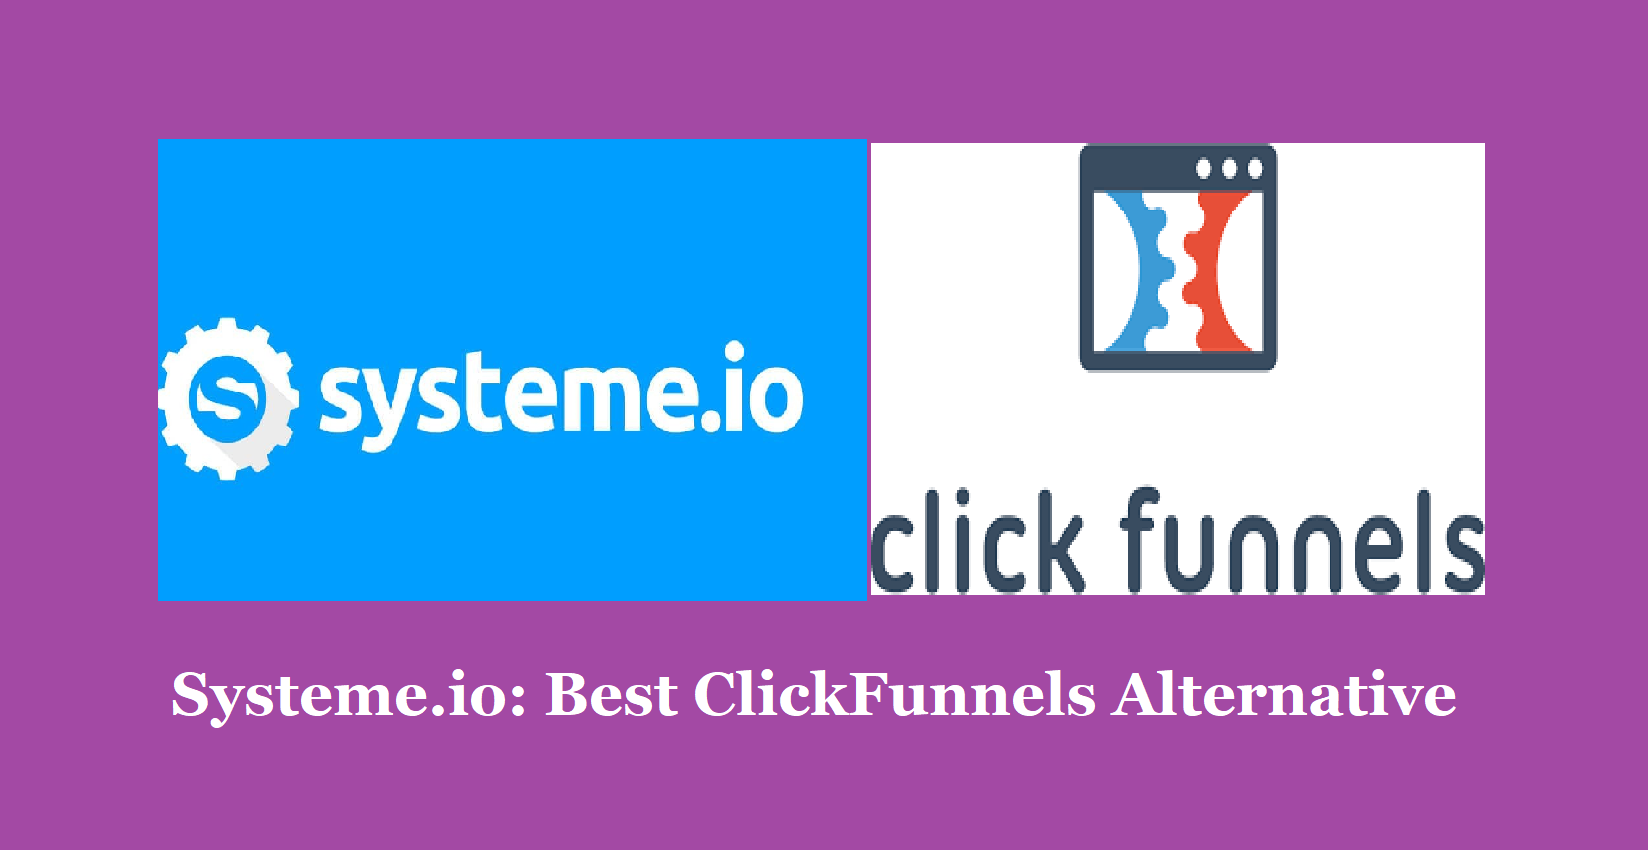 Systeme.io - Best ClickFunnels Alternative